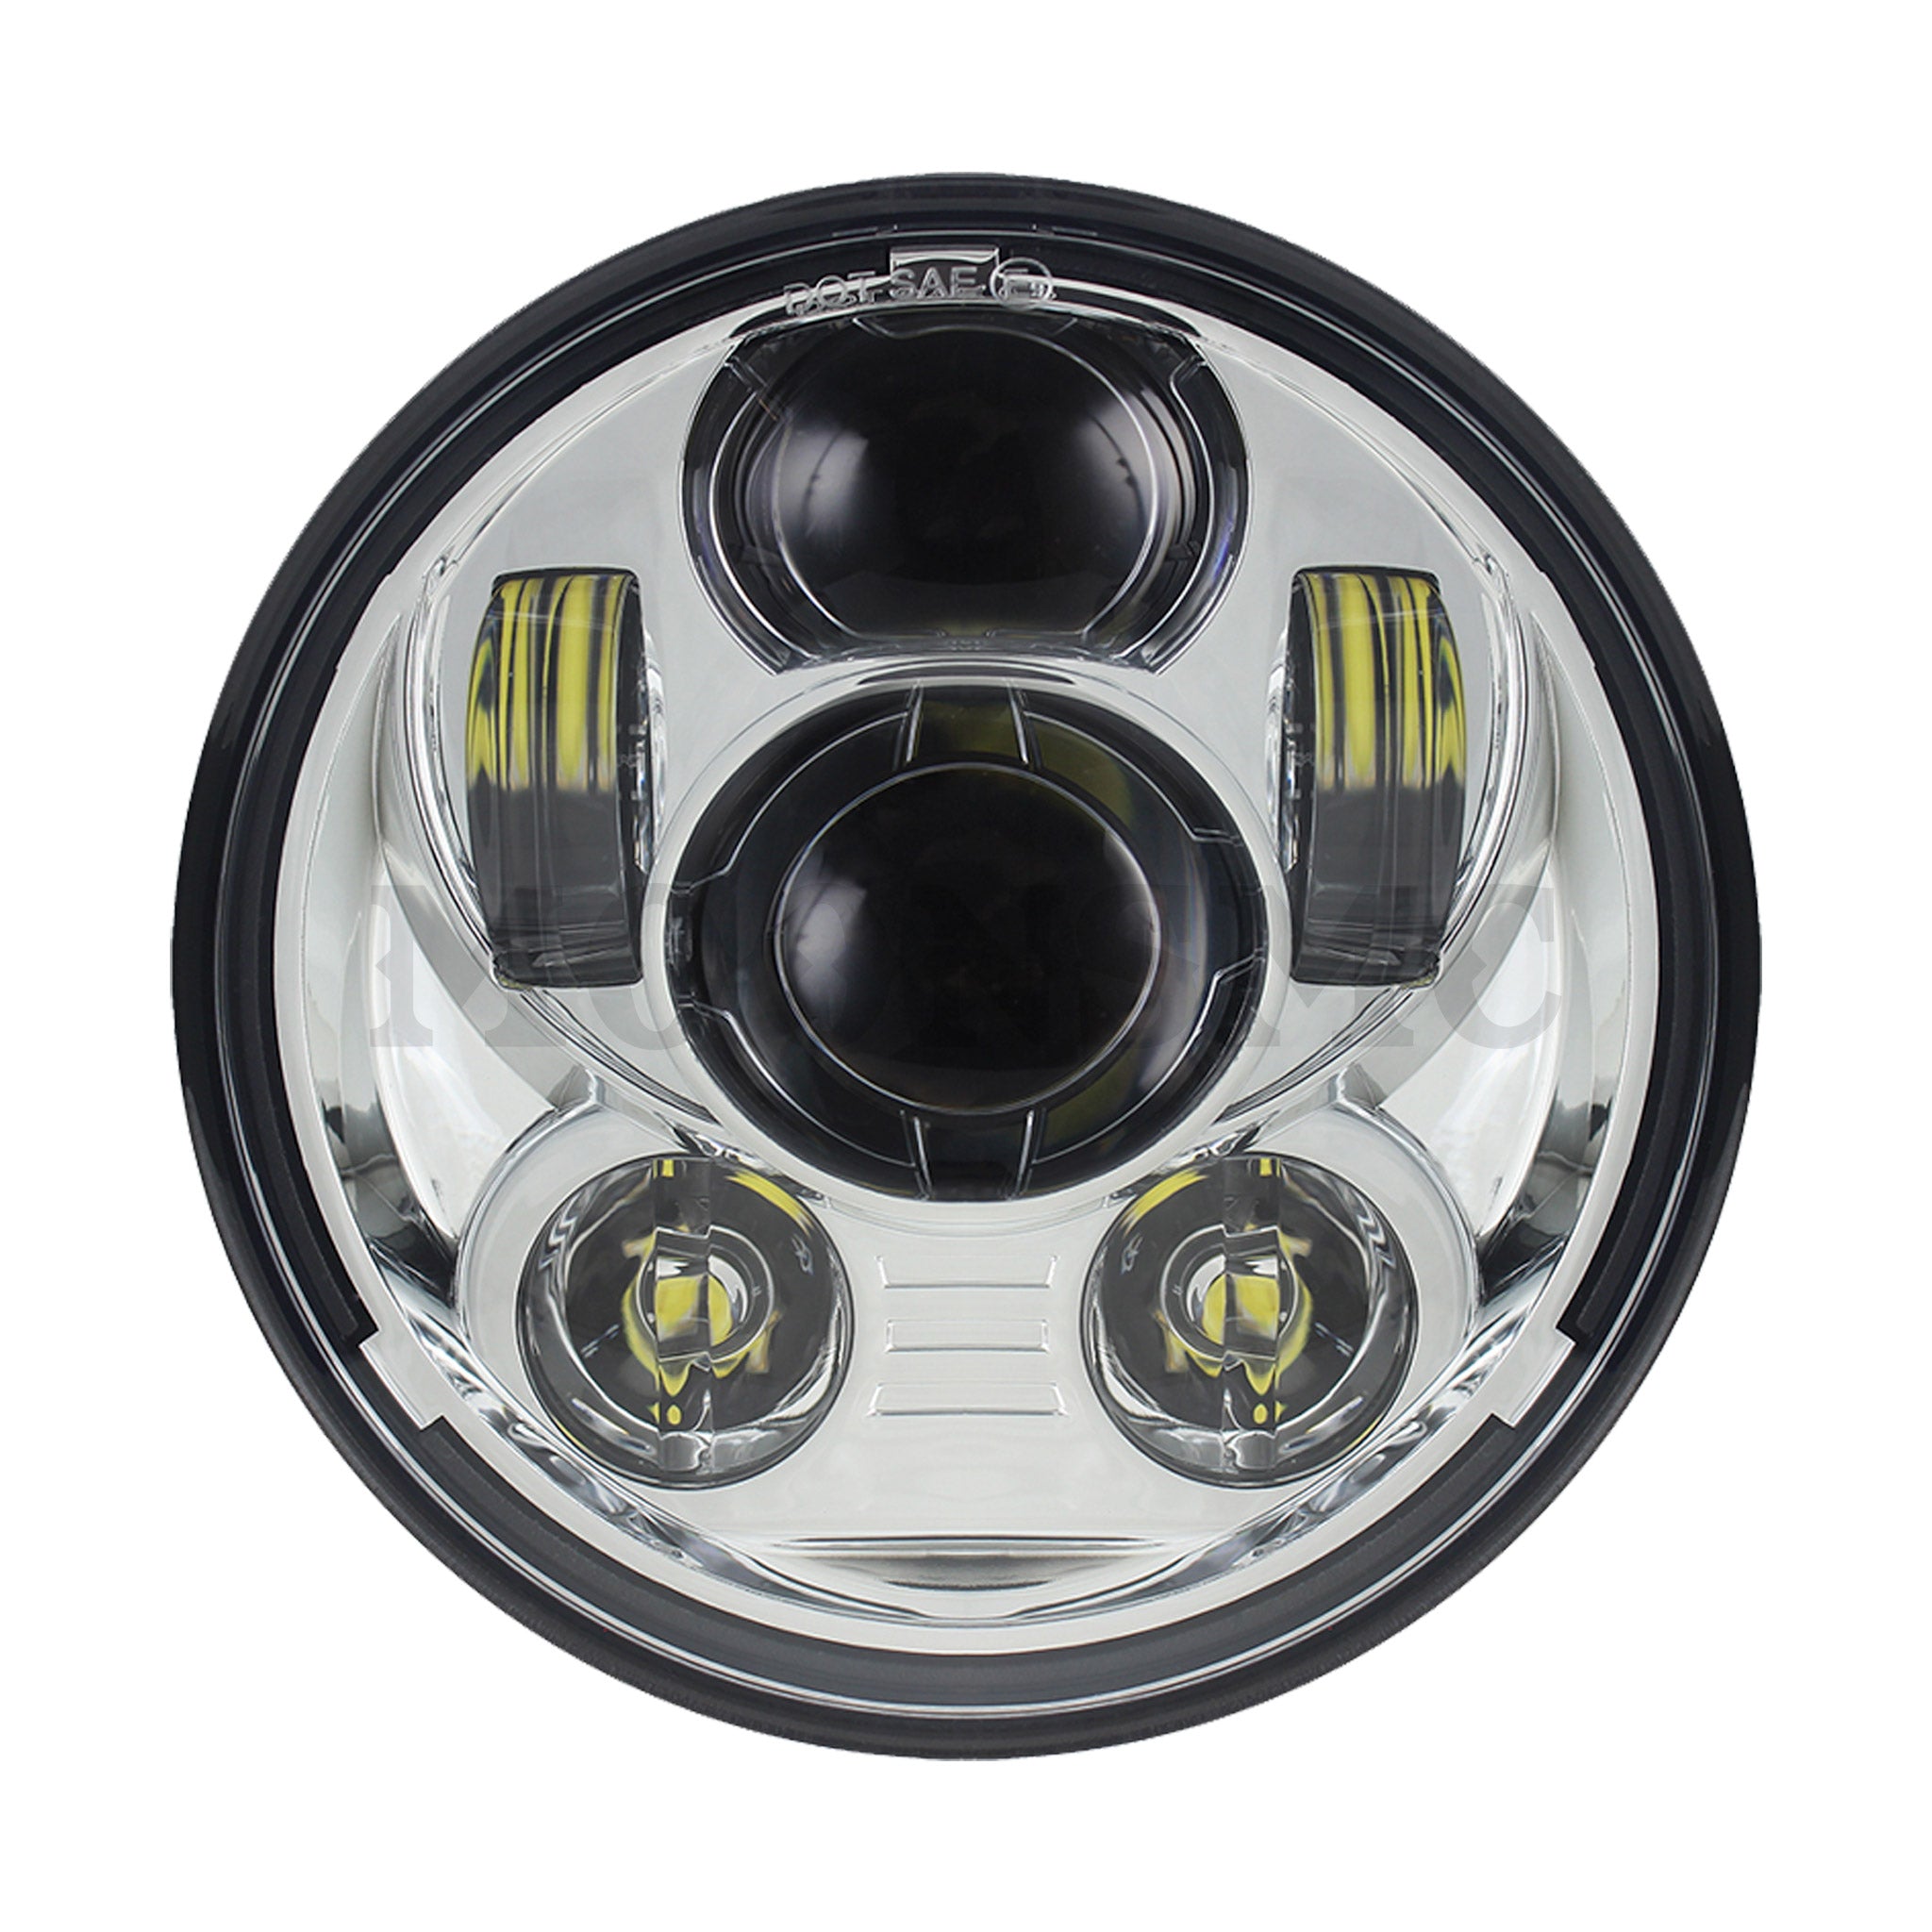 5.75 MOONSMC® ムーンメーカー 2 LED ヘッドライト ハーレー用